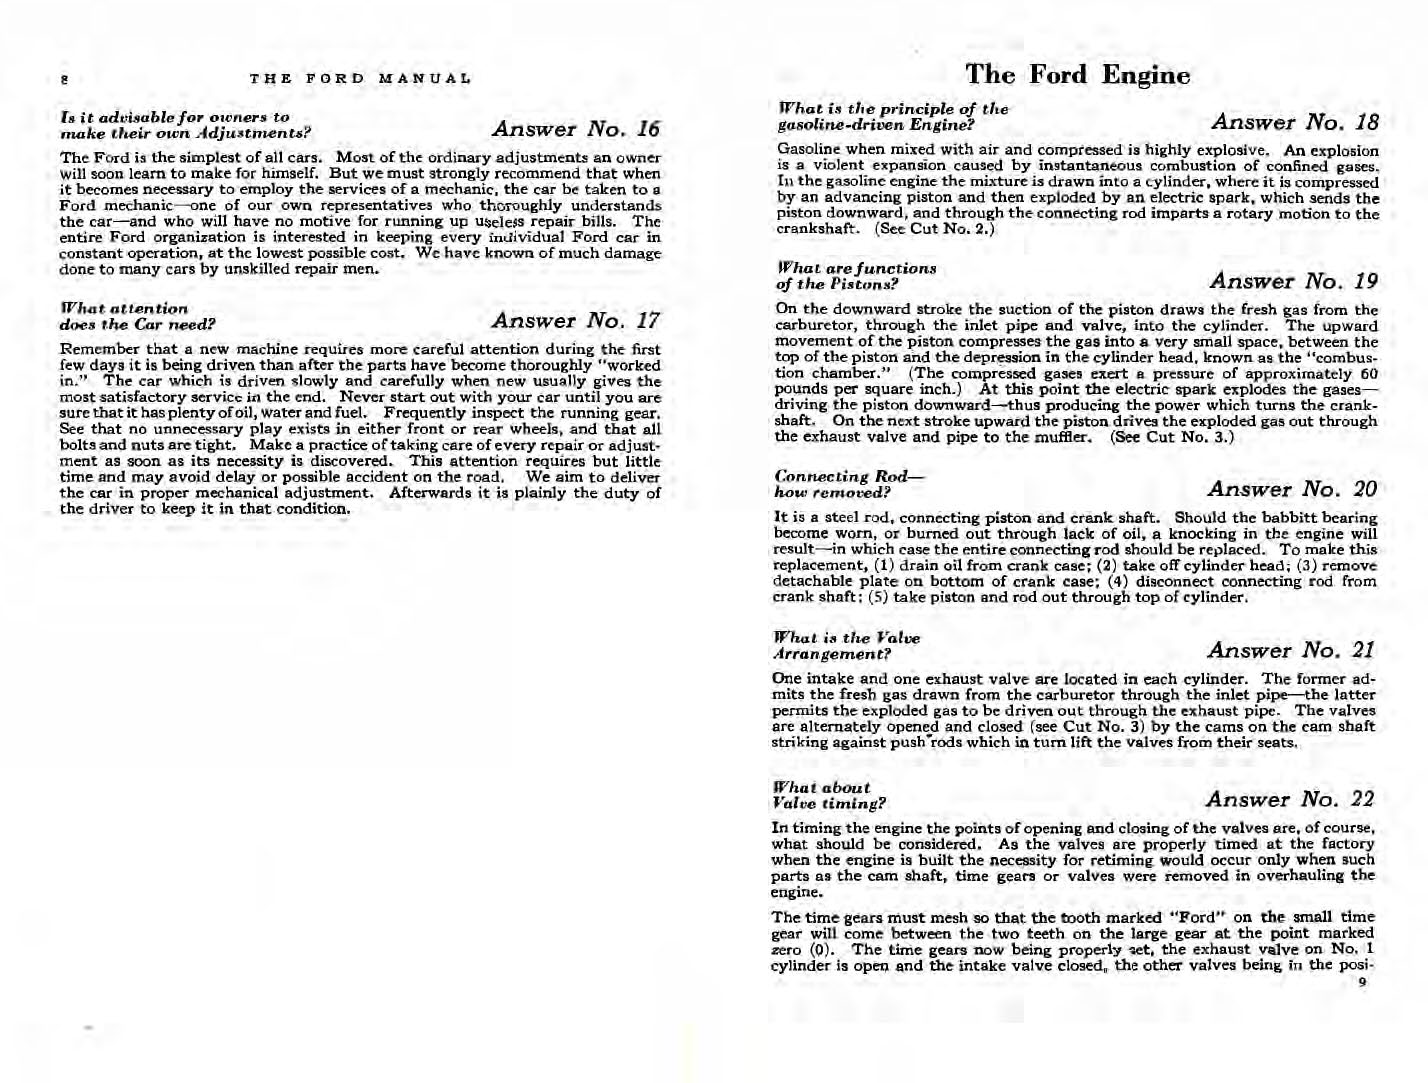 n_1922 Ford Manual-08-09.jpg